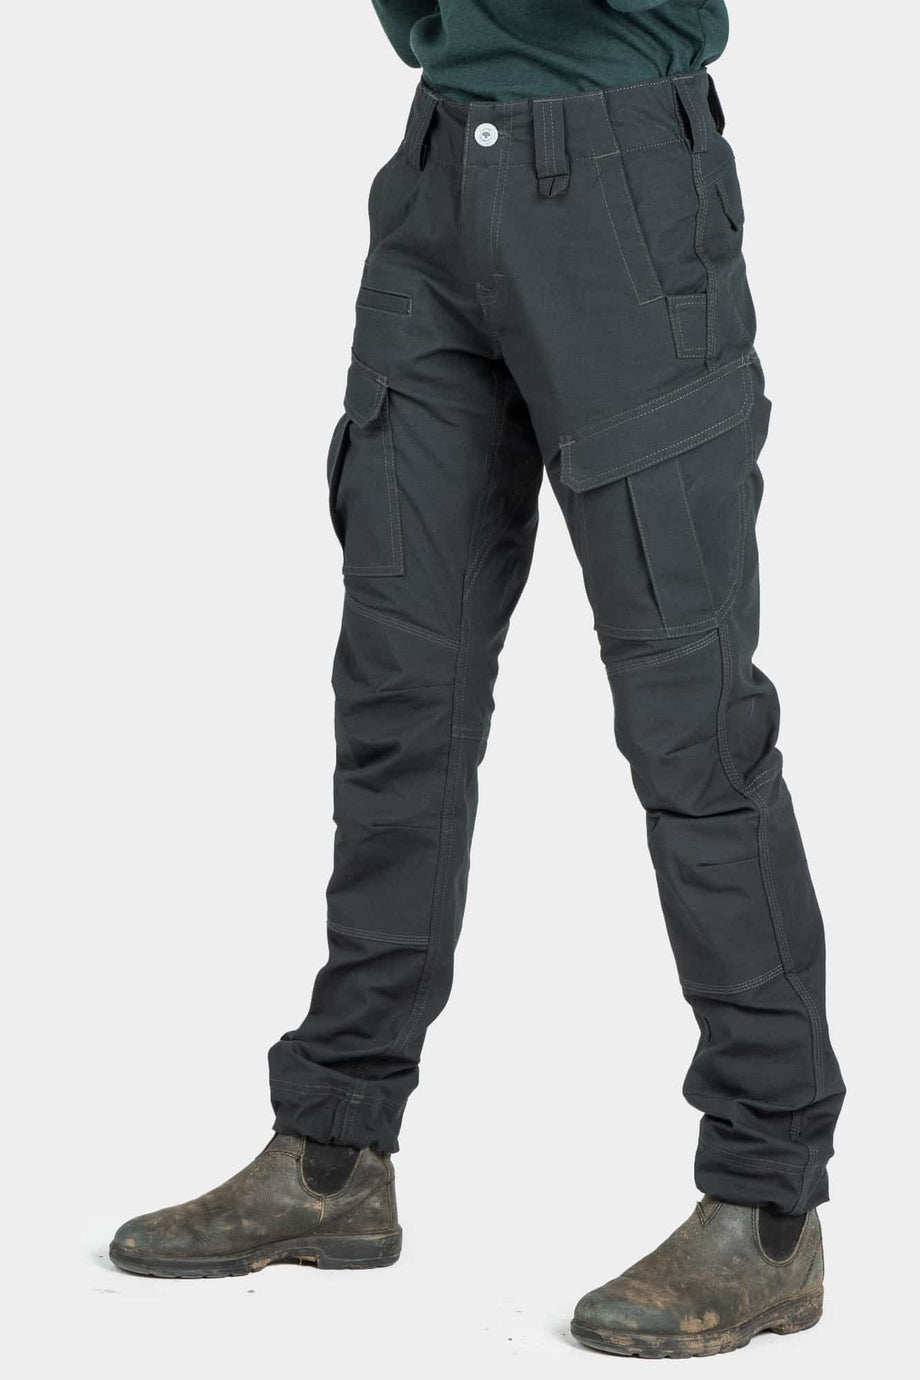 Dovetail Workwear Ready Set Cargo Pant - Women's Black Ripstop, 12x32